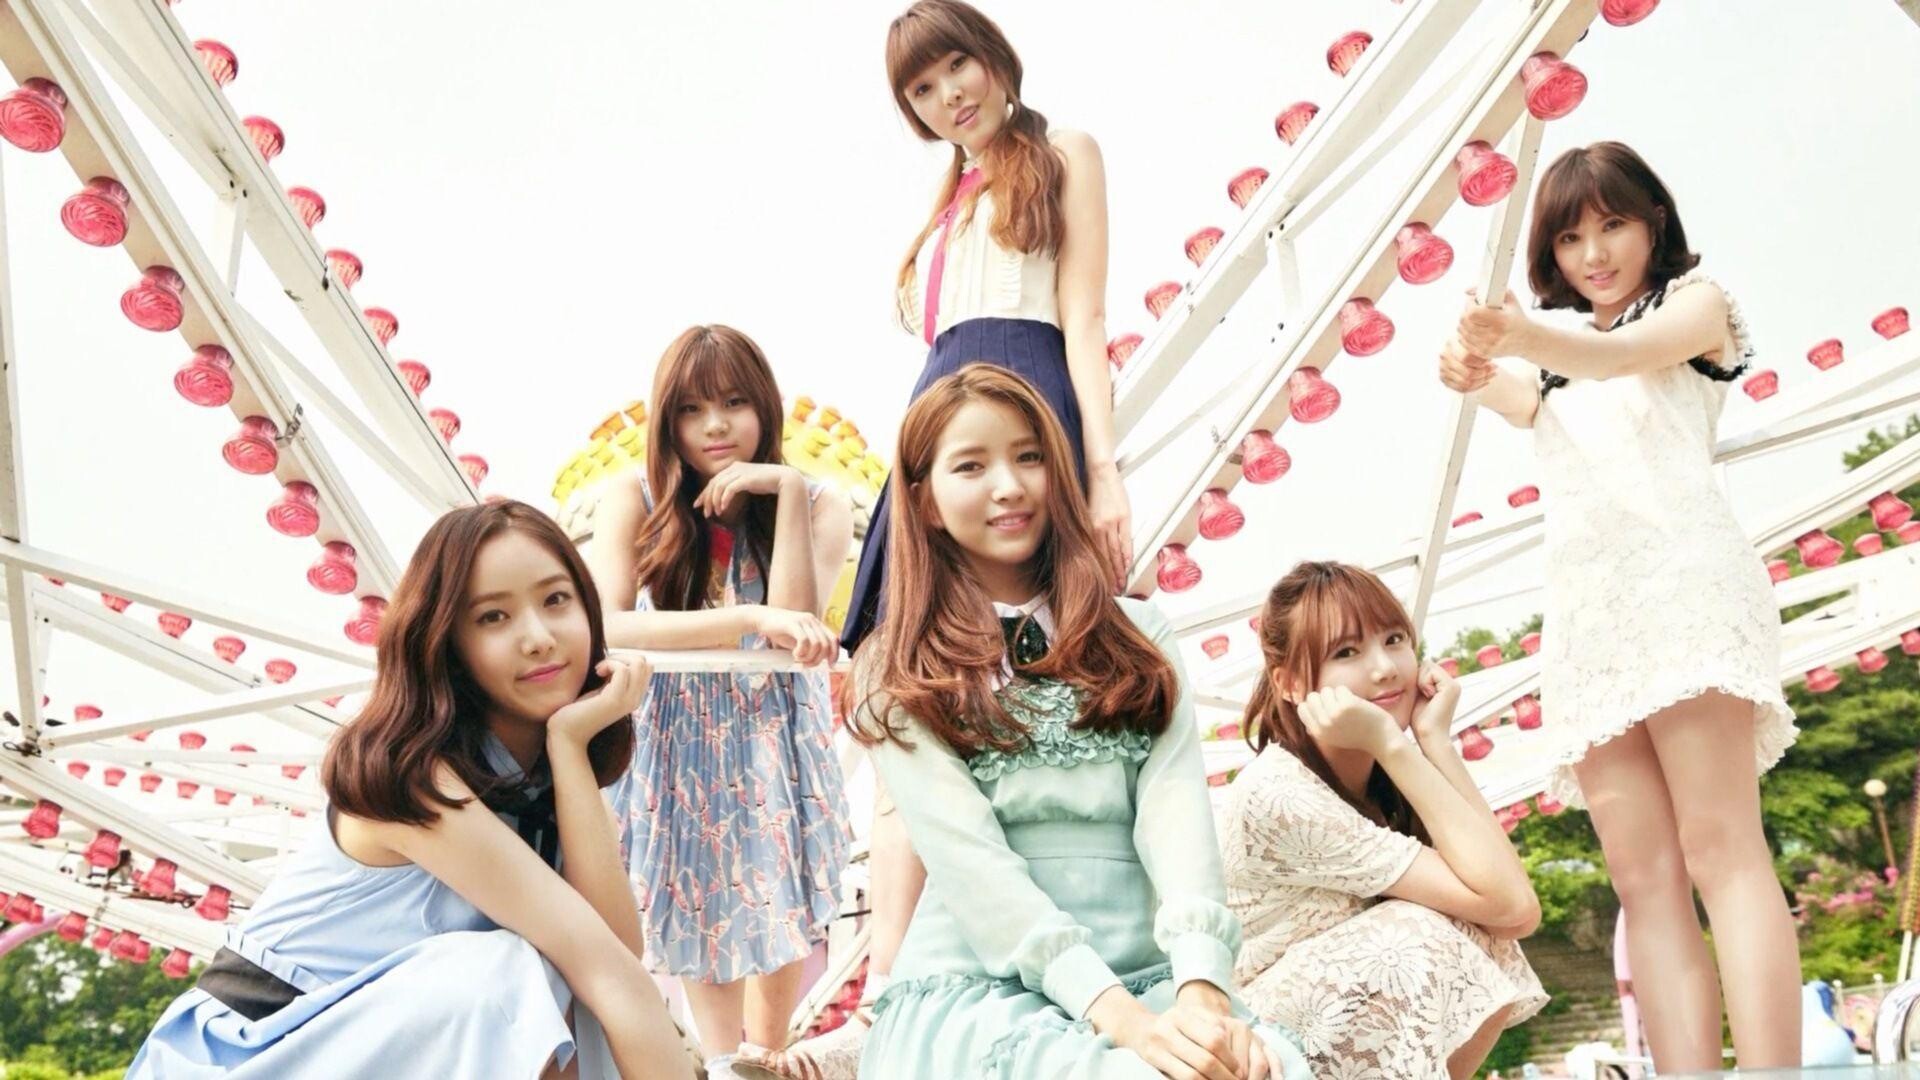 GFriend: Members of a popular disbanded Korean girls' band, Sowon, Eunha, SinB, Yerin. 1920x1080 Full HD Wallpaper.